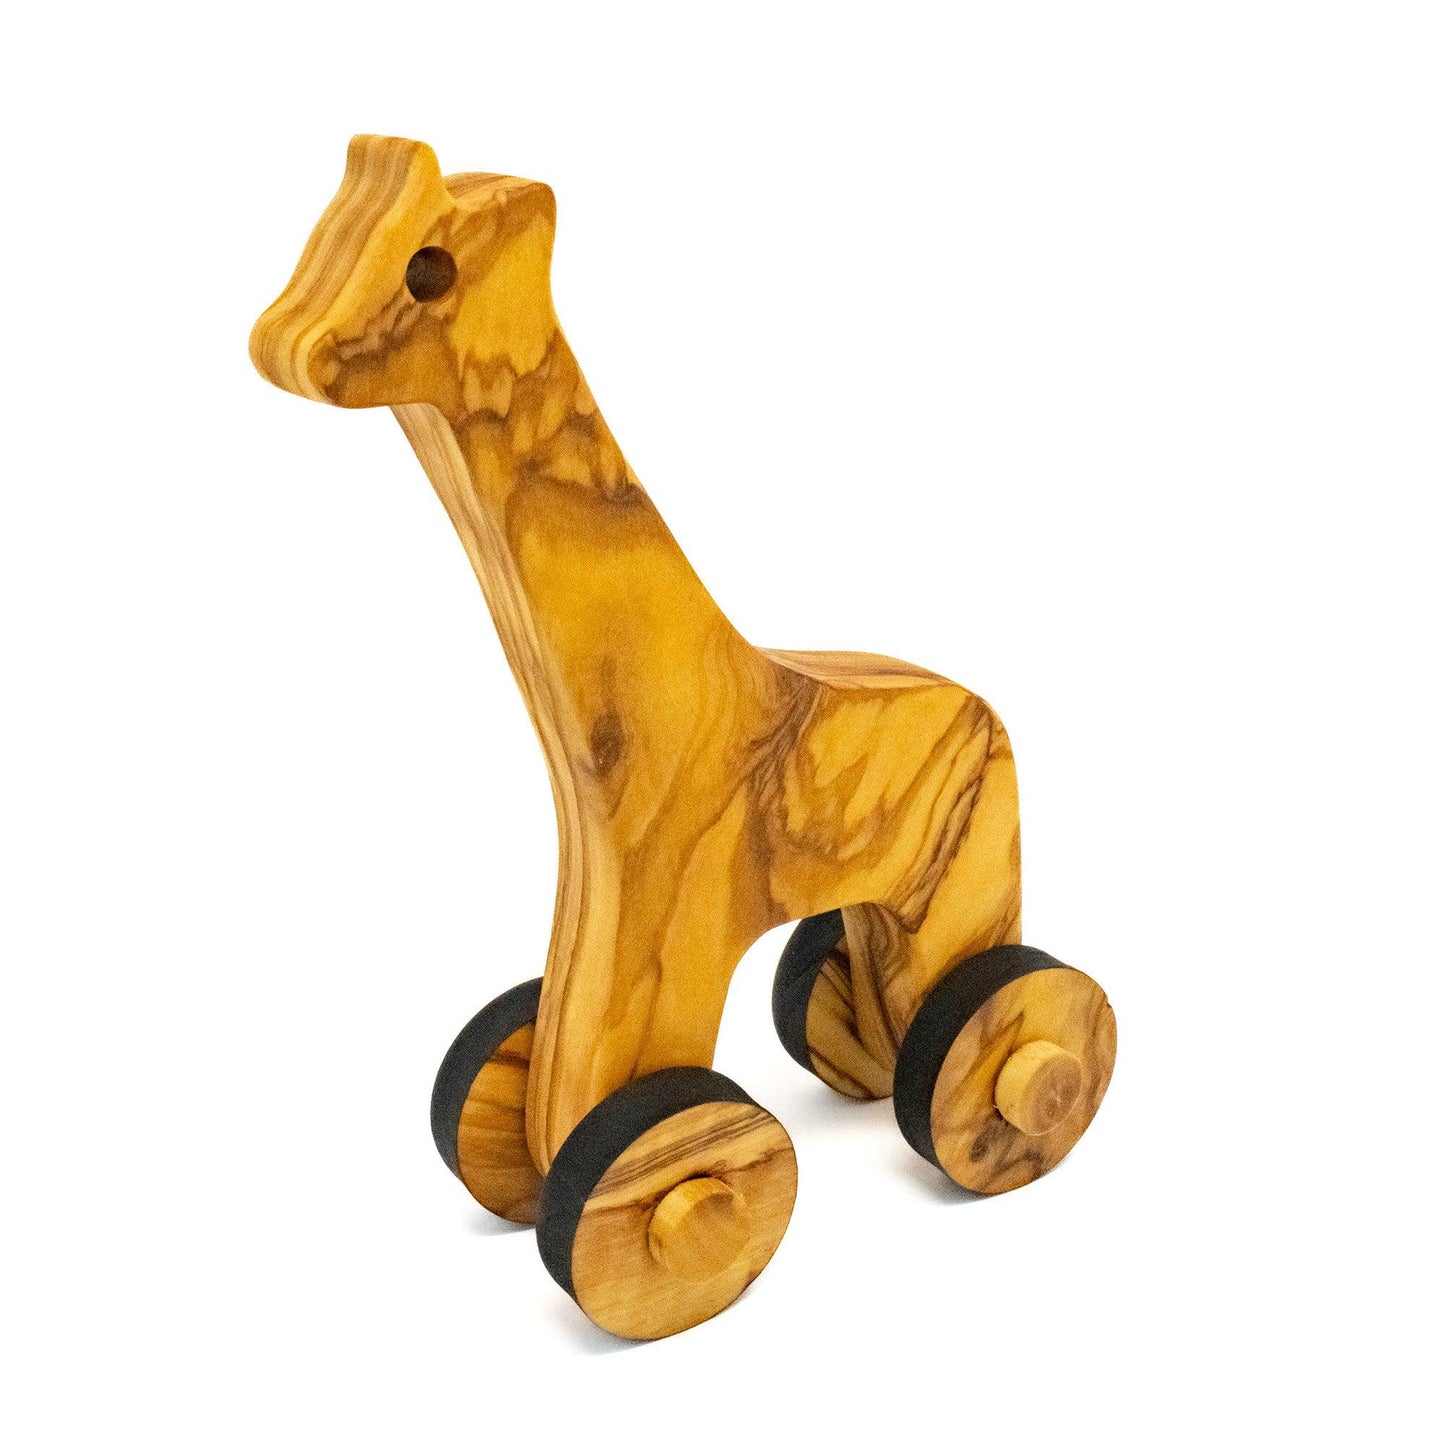 Handmade wooden figure toy, giraffe side view